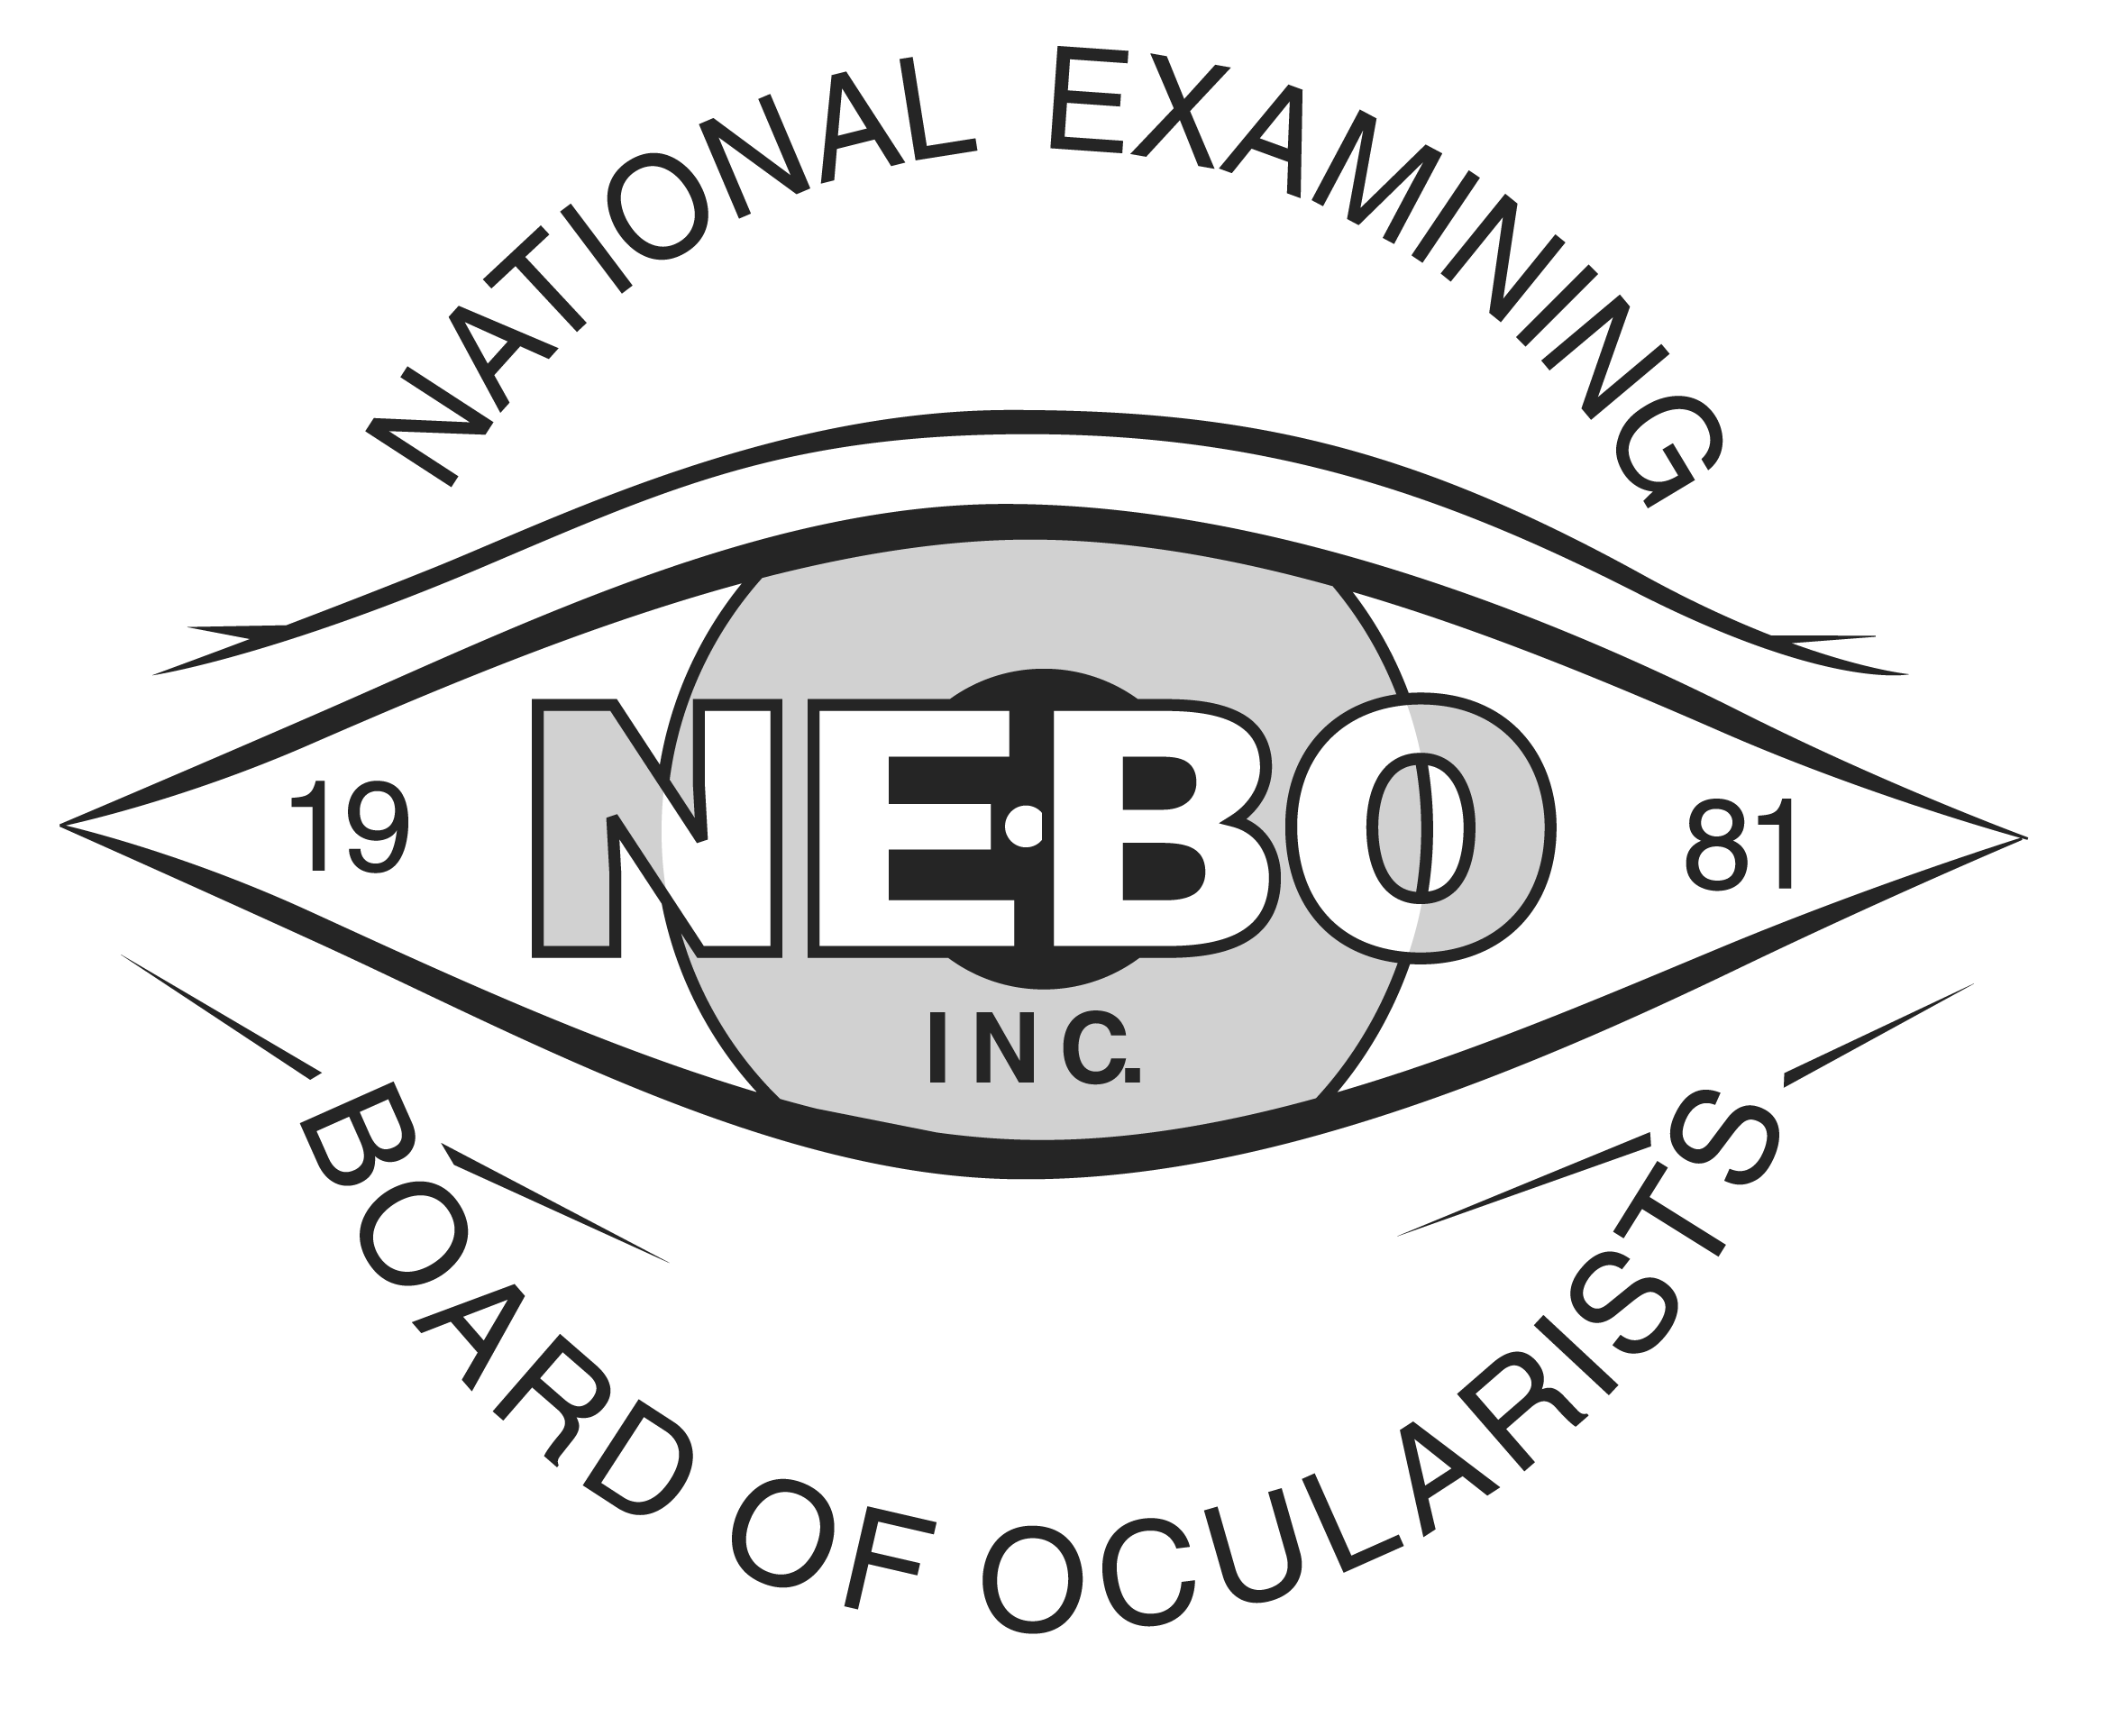 National Examination Board of Ocularist, USA